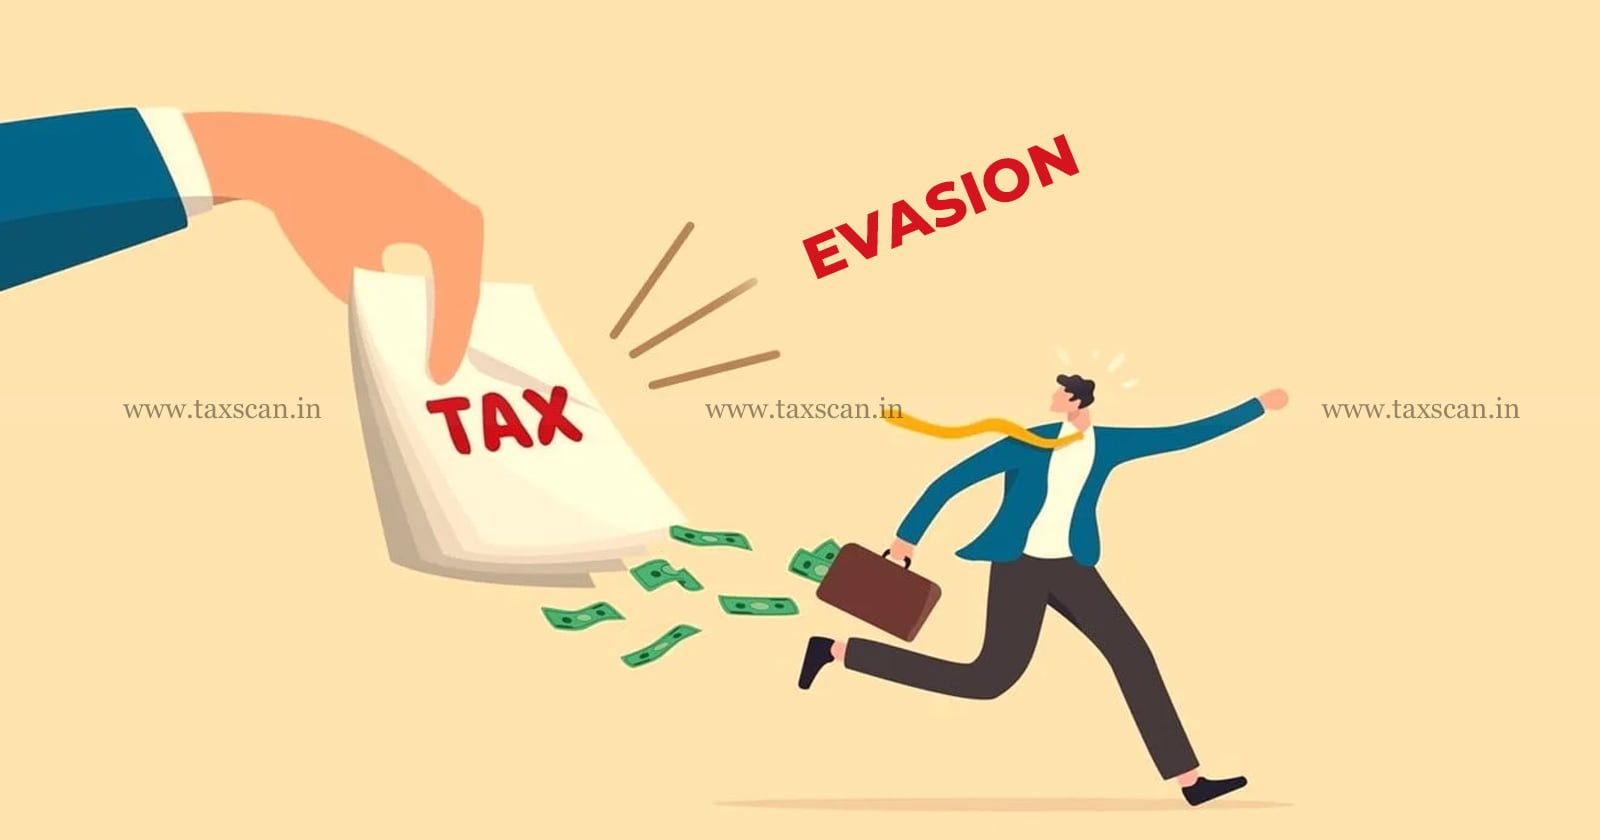 utilization of amount - ER Returns - CESTAT - Service Tax demand - Evade Tax - Evasion of tax - Customs - Excise - Service Tax - Taxscan